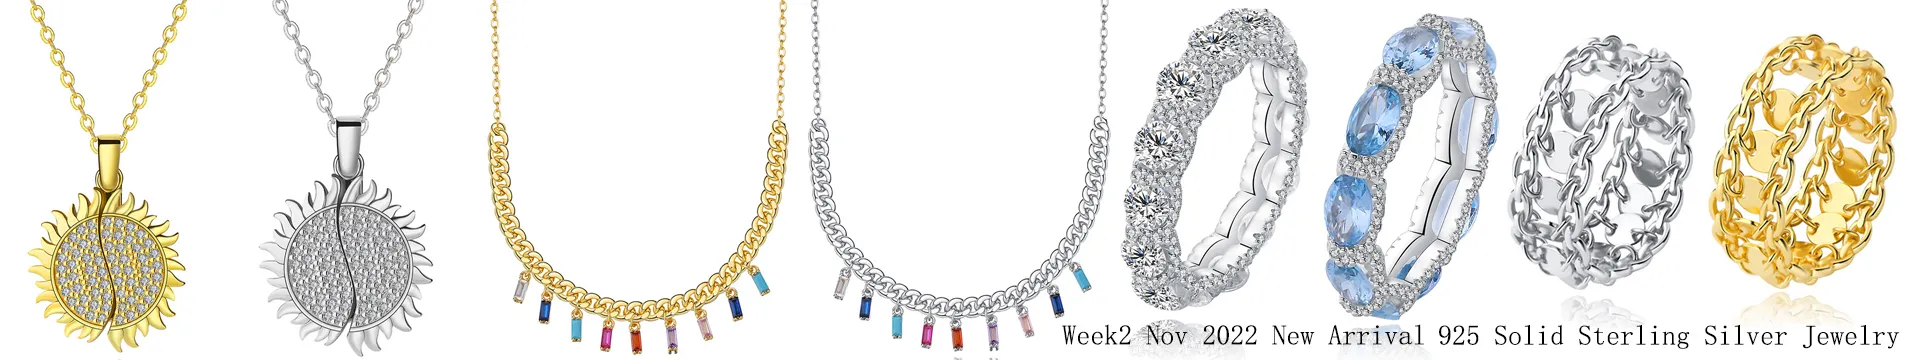 Wholesale 925 Silver Jewelry | Week2 Nov 2022 New Arrival